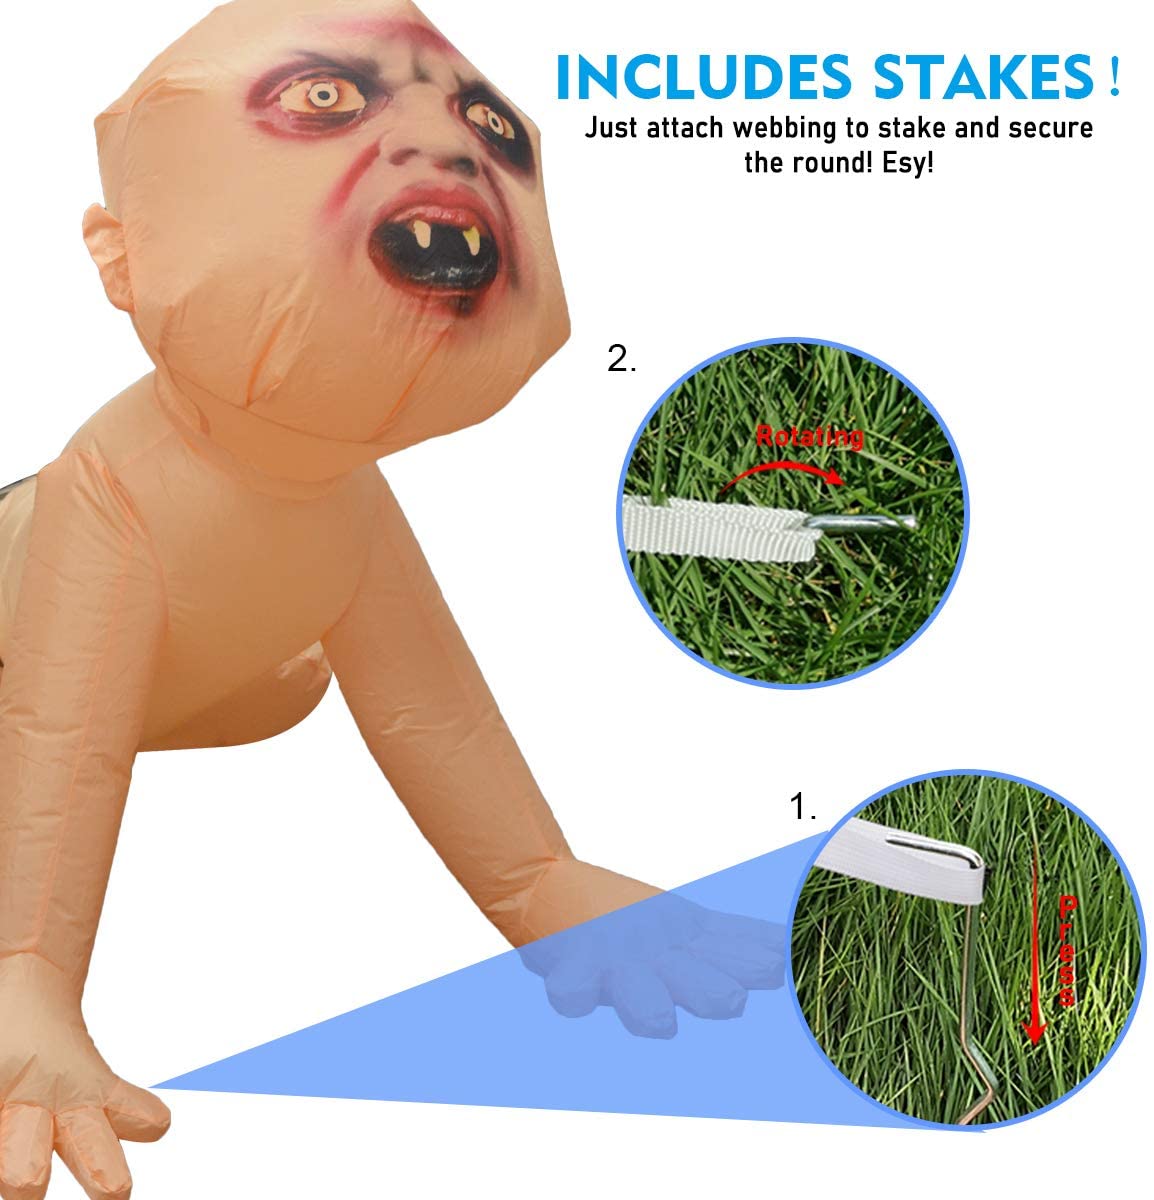 Giant Zombie Baby Halloween Decoration